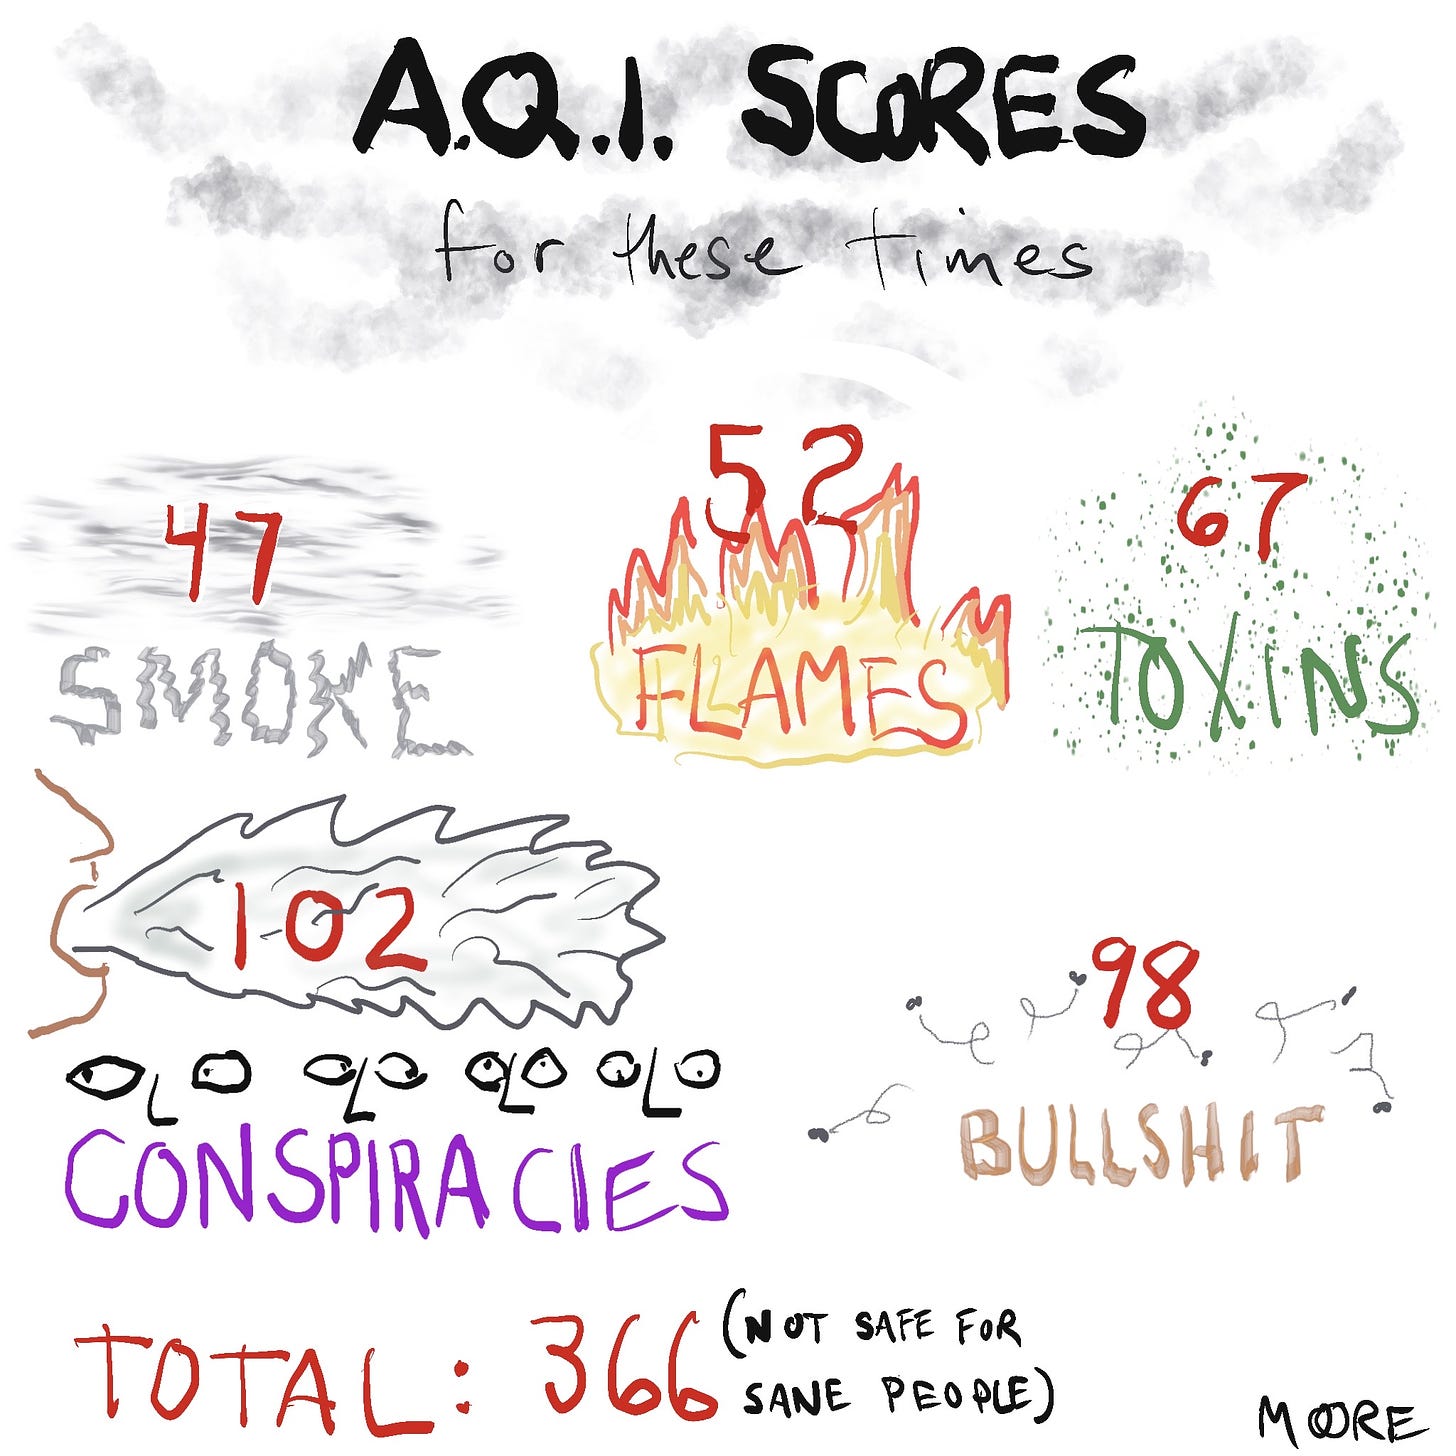 AQI scores